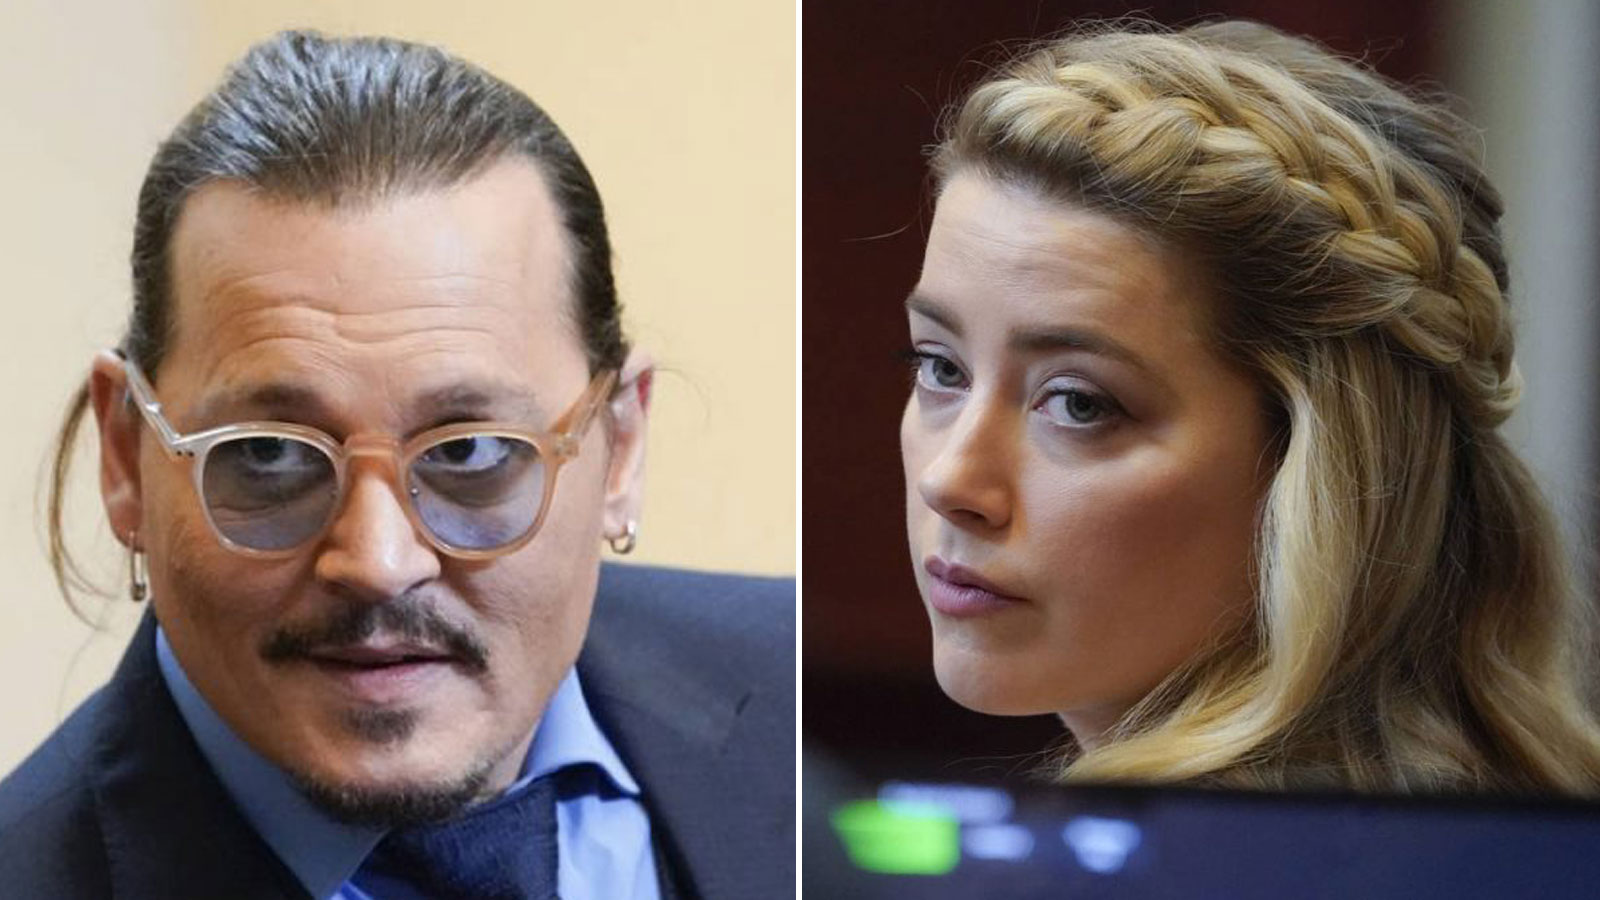 Johnny Depp, left, and Amber Heard (AP Photos)...